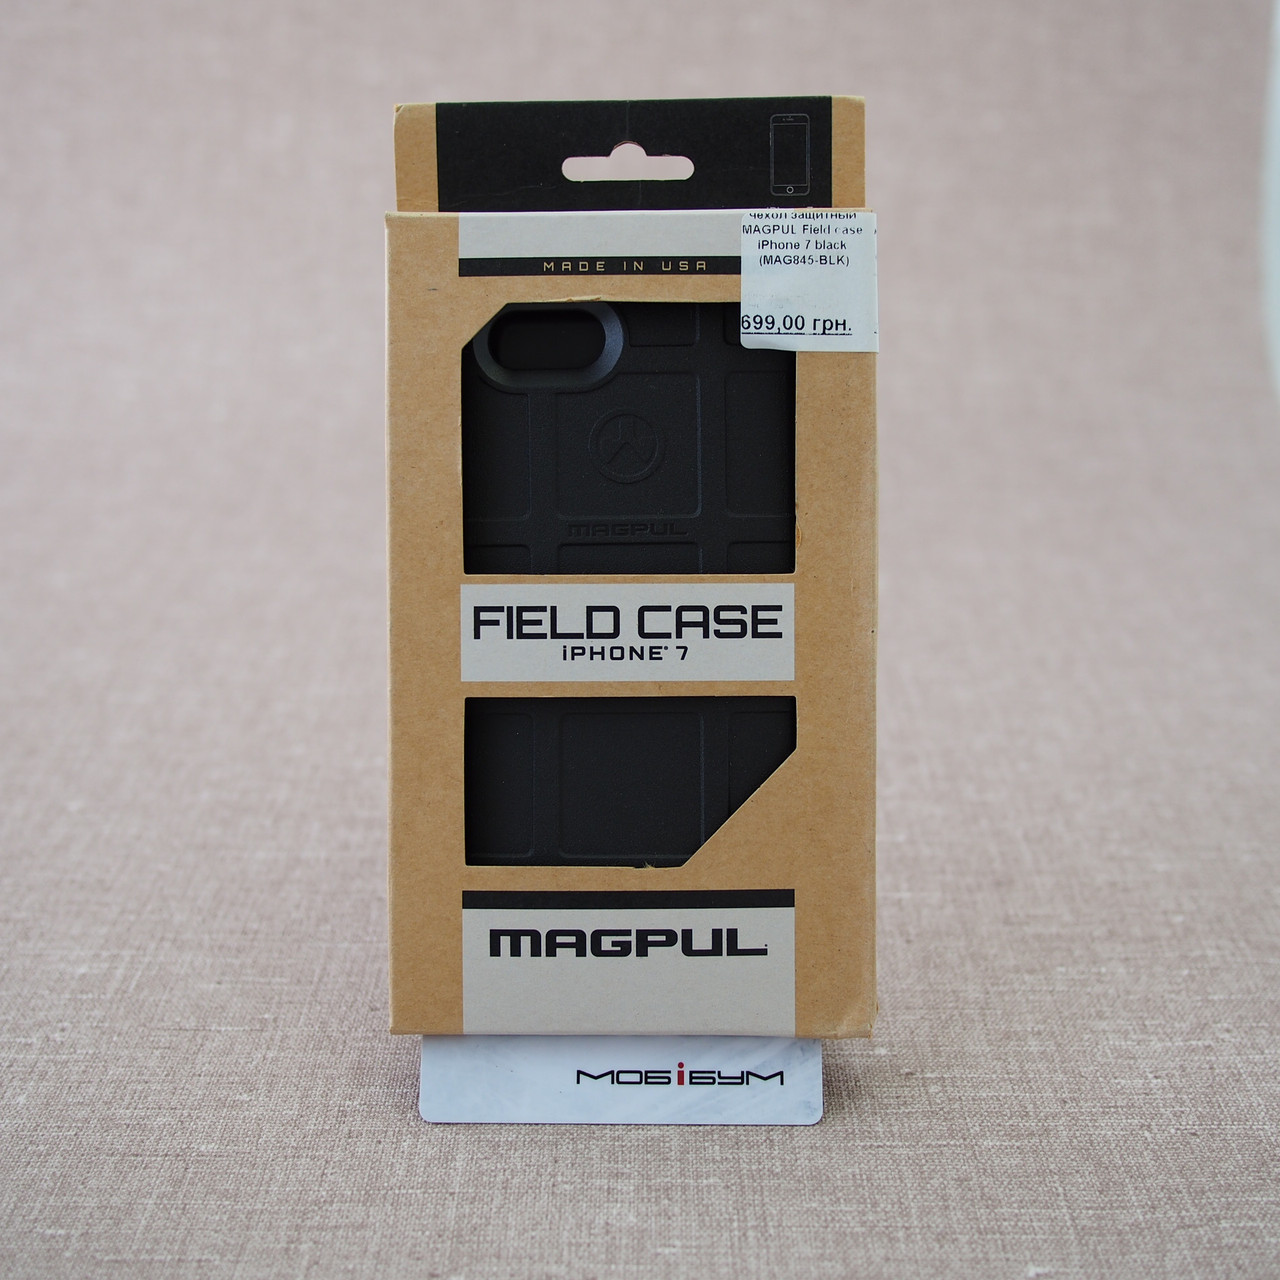 Chehol Zashitnyj Magpul Field Case Iphone 7 Black Mag845 Blk Prodazha Cena V Ukraine Productcategory Caption Ot Mbbm Com Ua